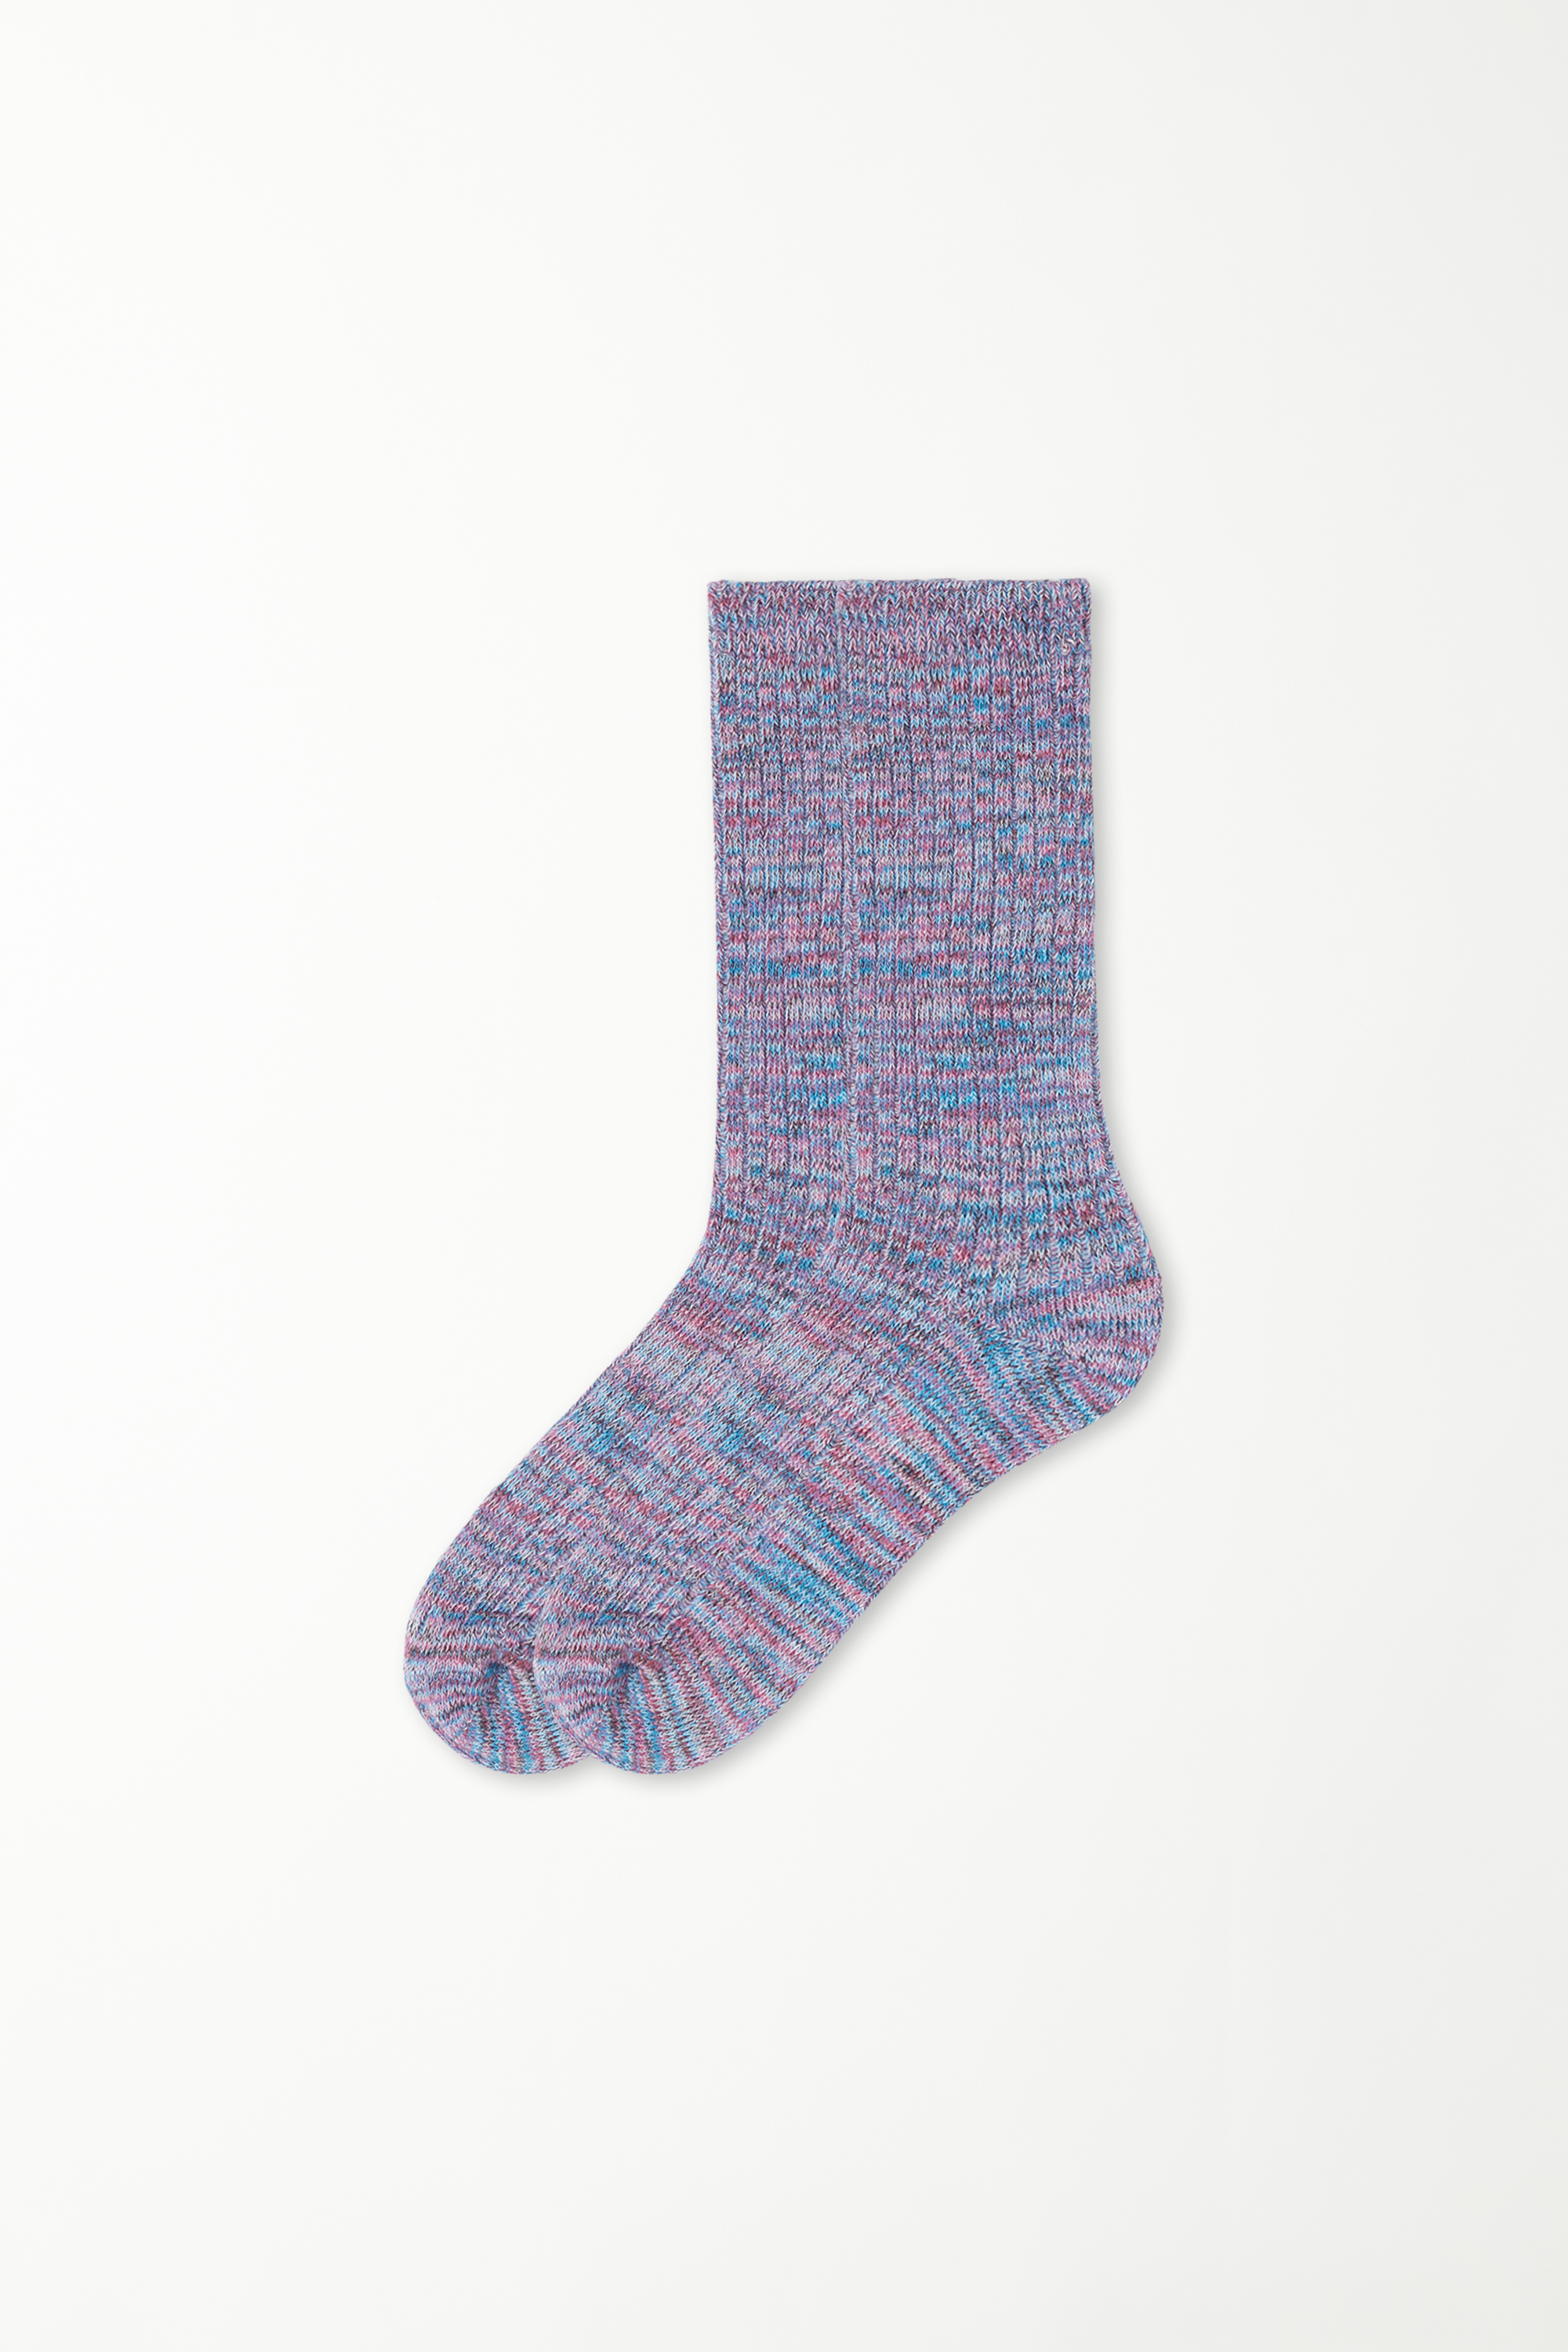 3/4 Length Thick Multi-Coloured Socks